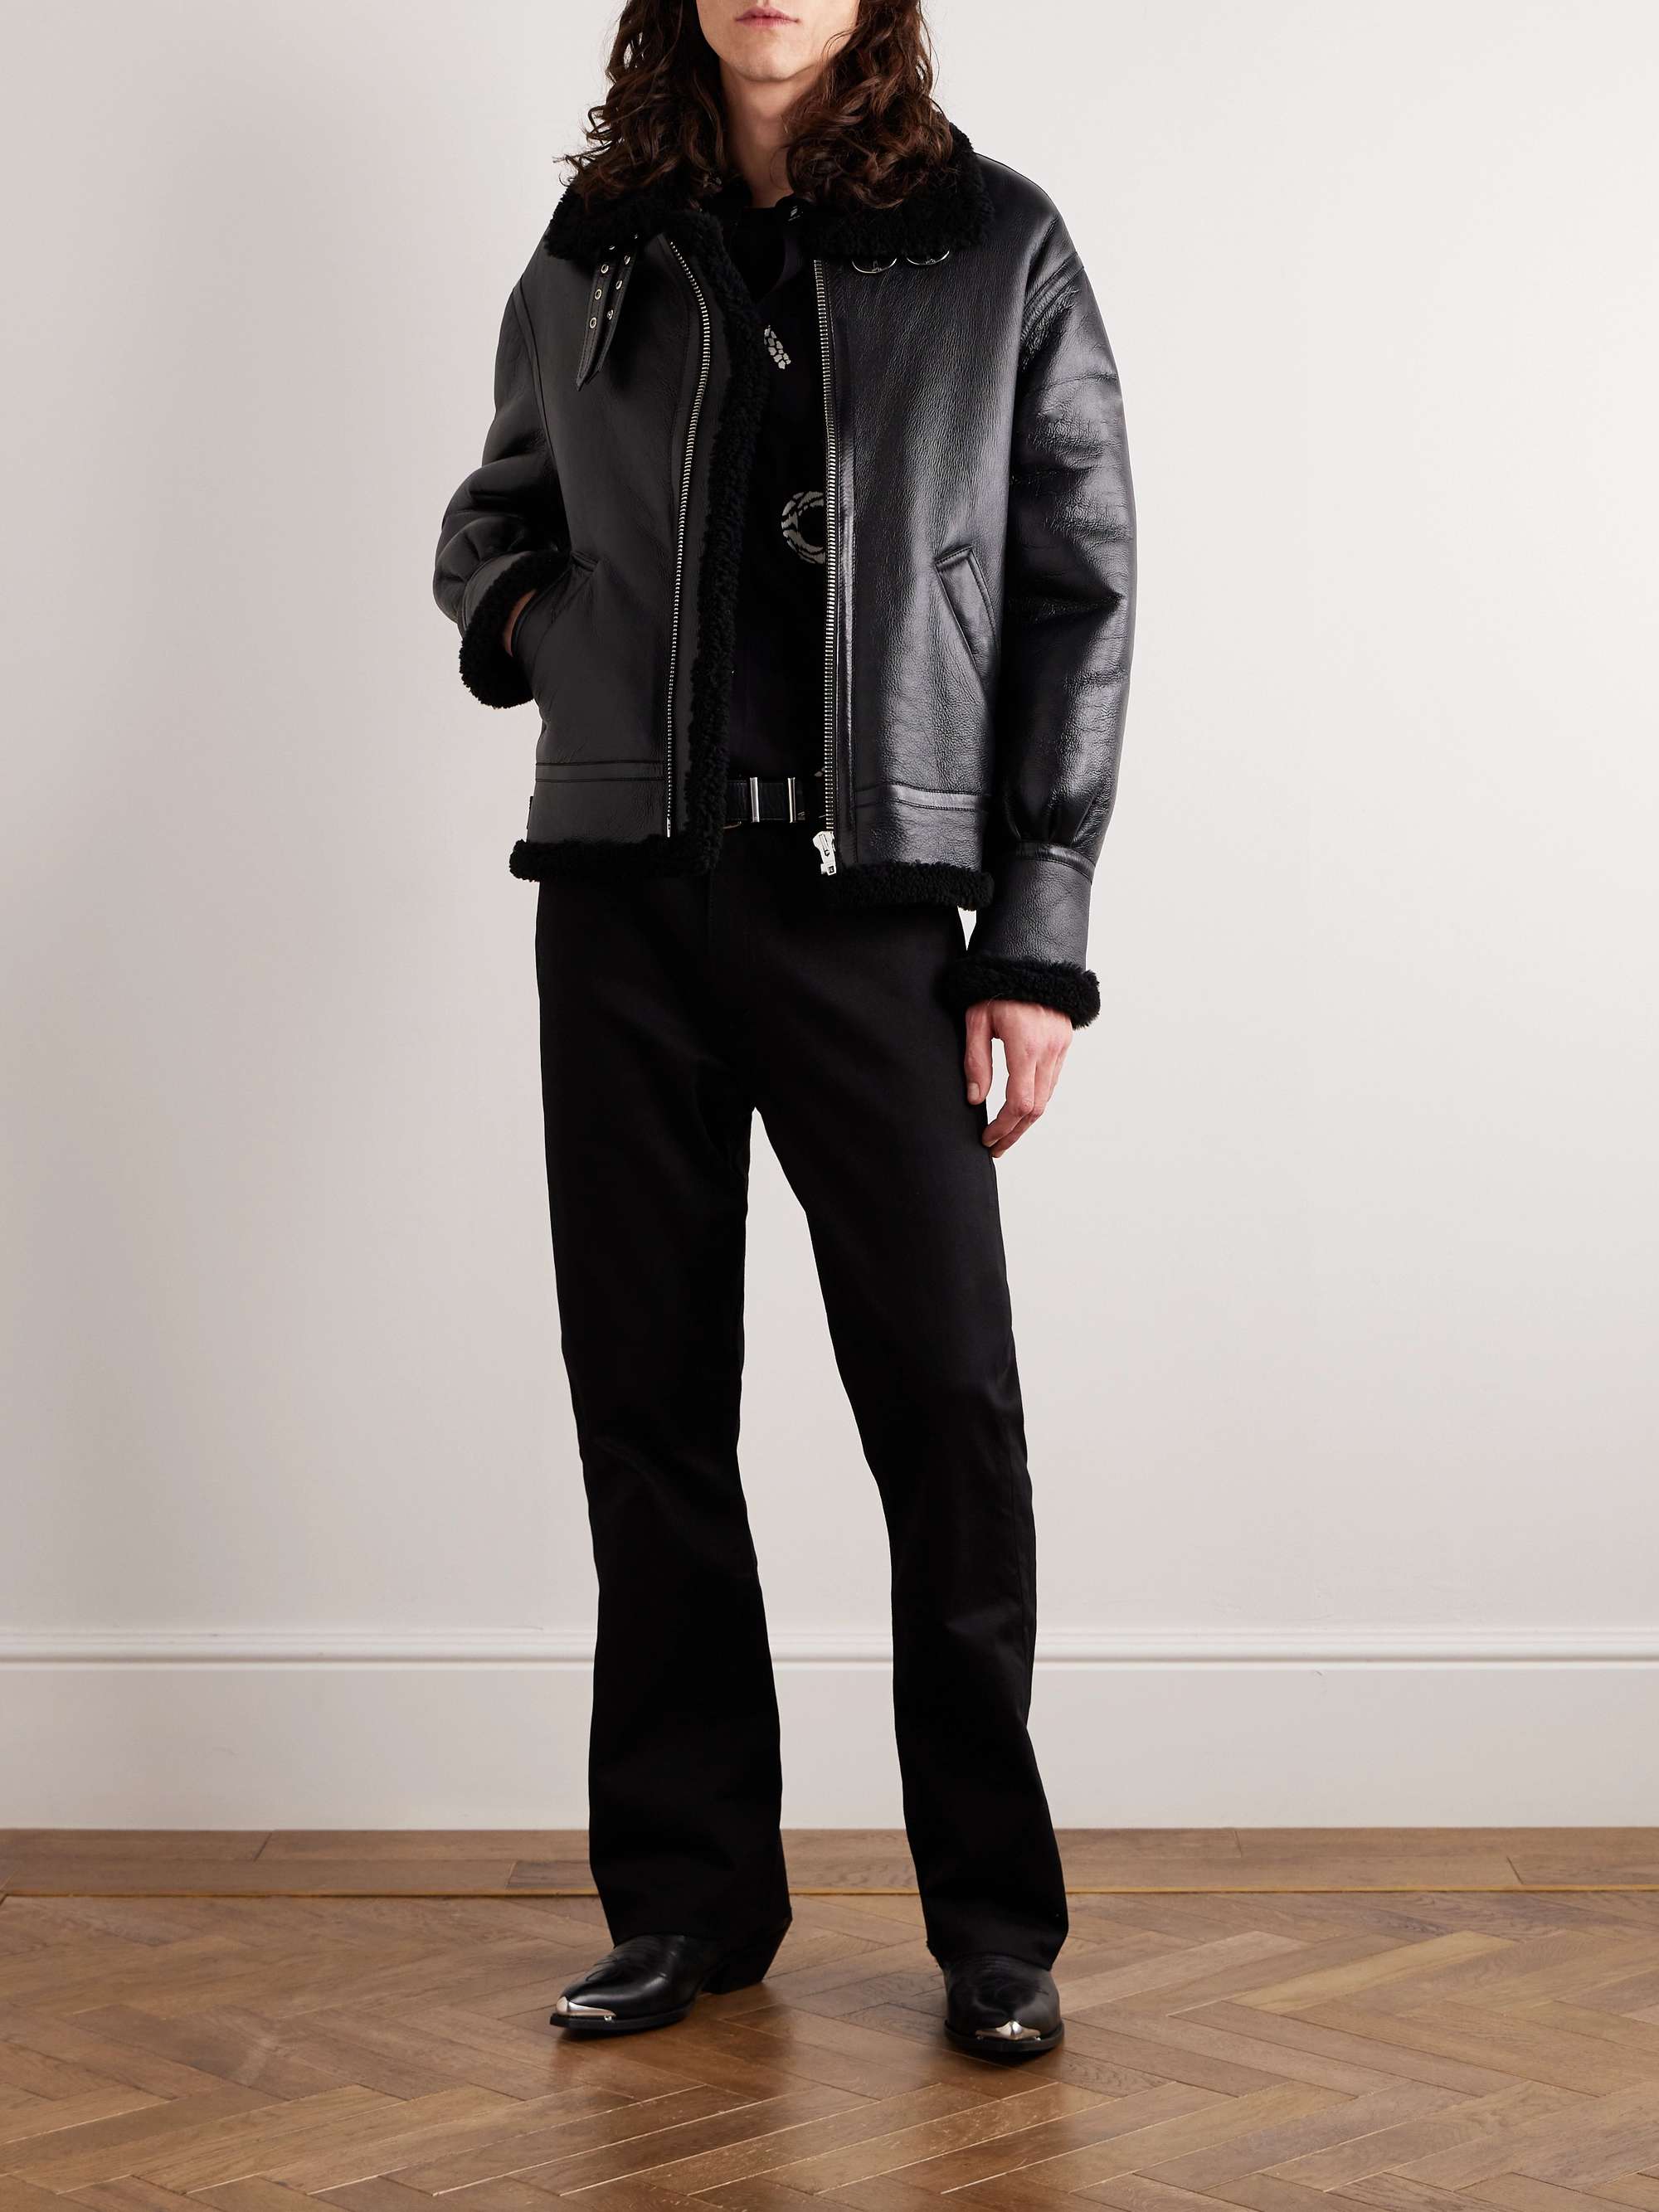 CELINE HOMME Shearling-Lined Textured-Leather Bomber Jacket